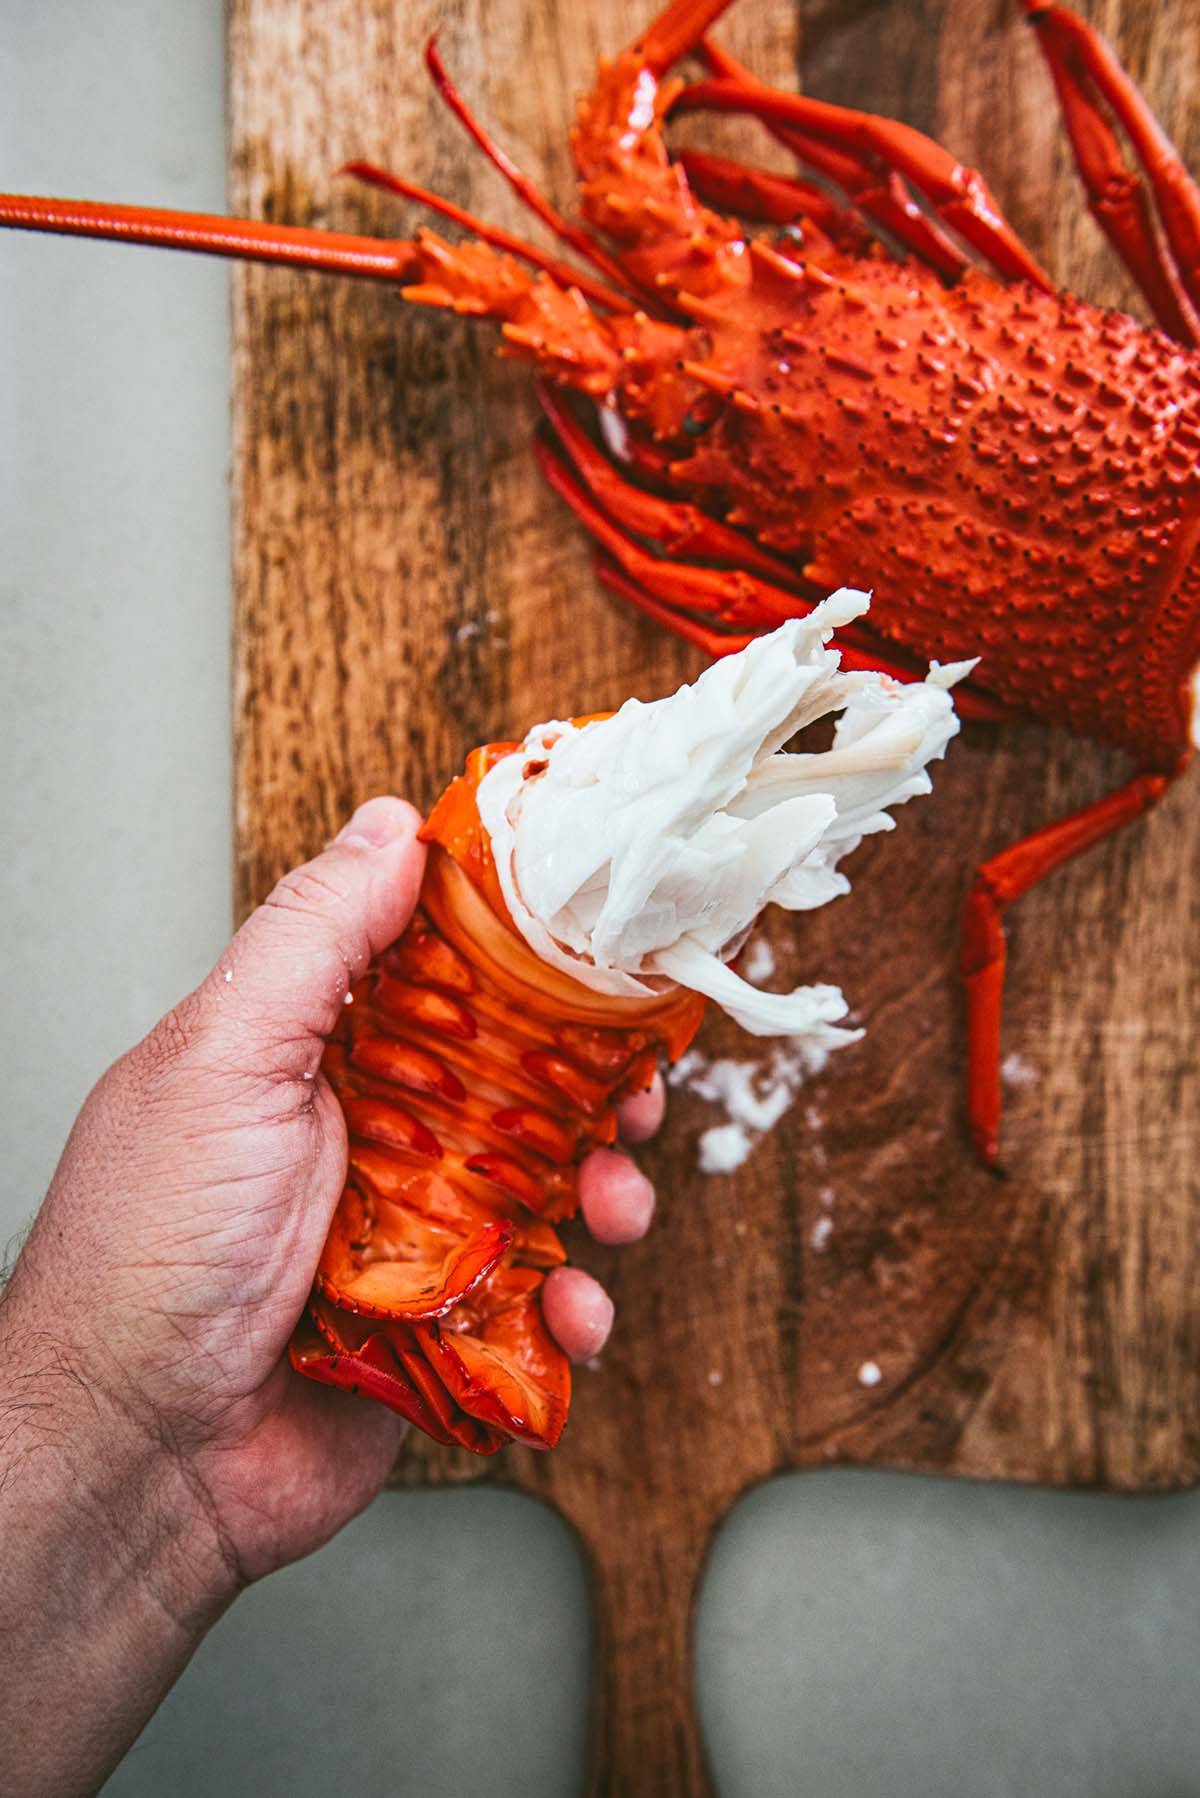 Lobster Rolls | Chew Town Food Blog